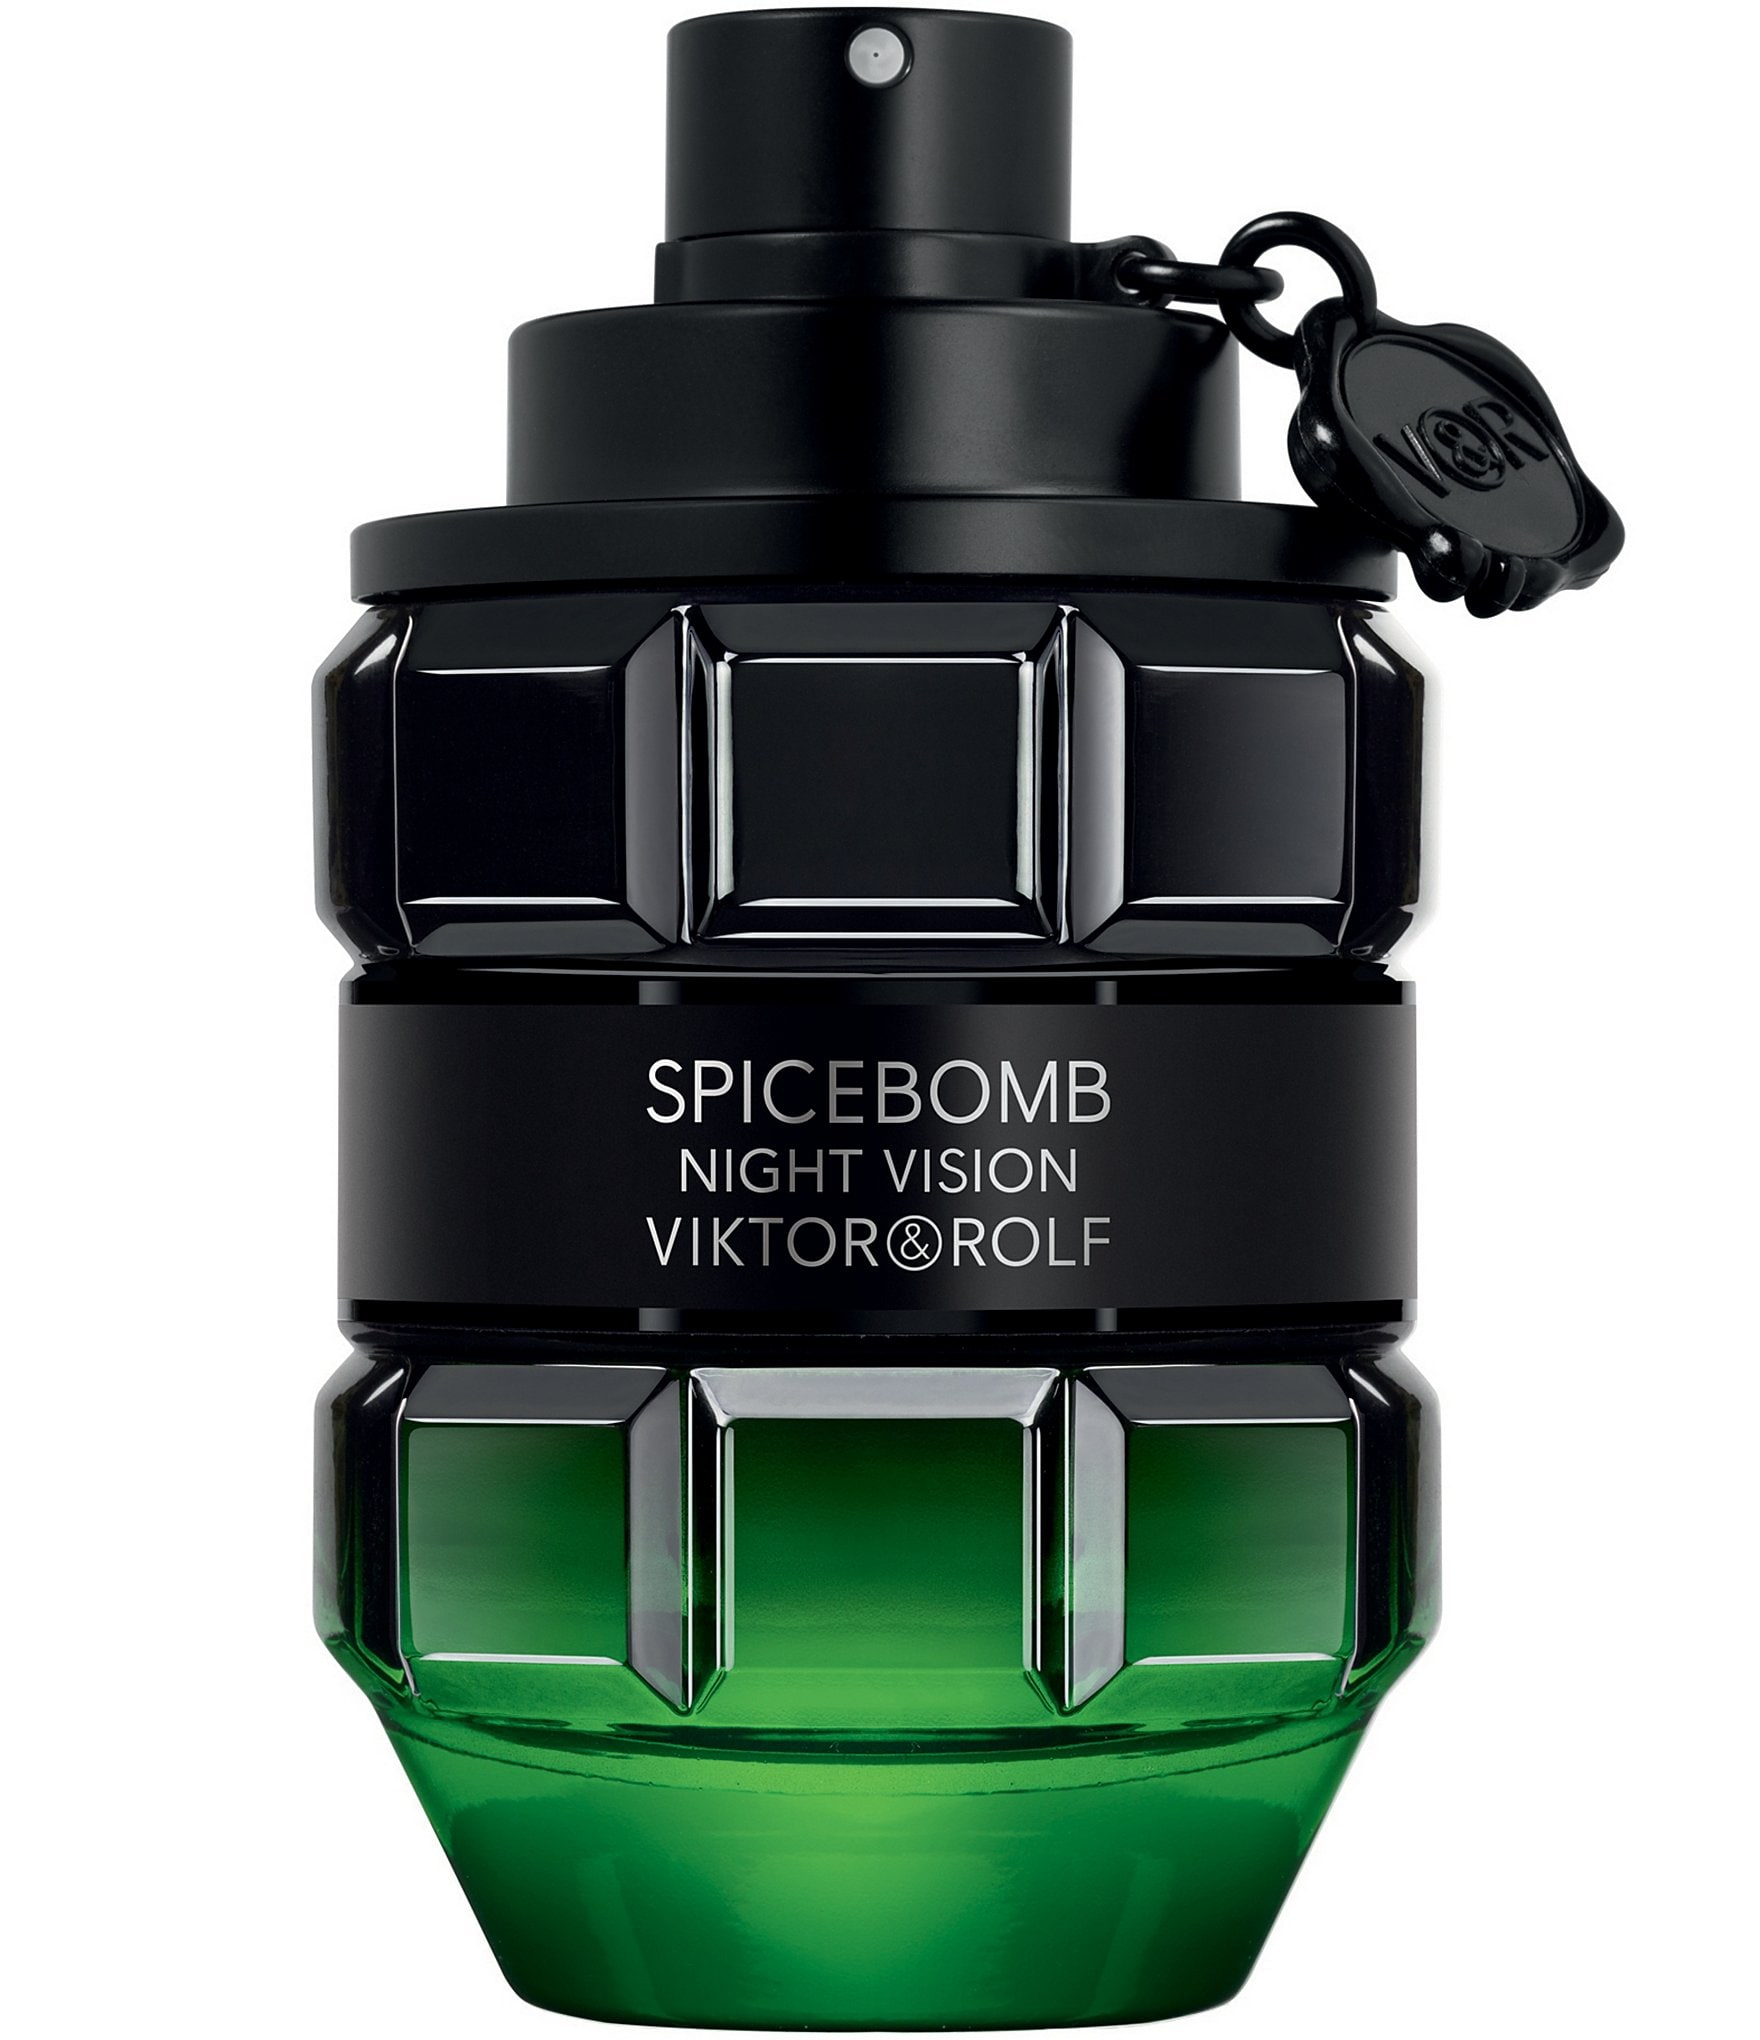 spicebomb extreme fragrancenet